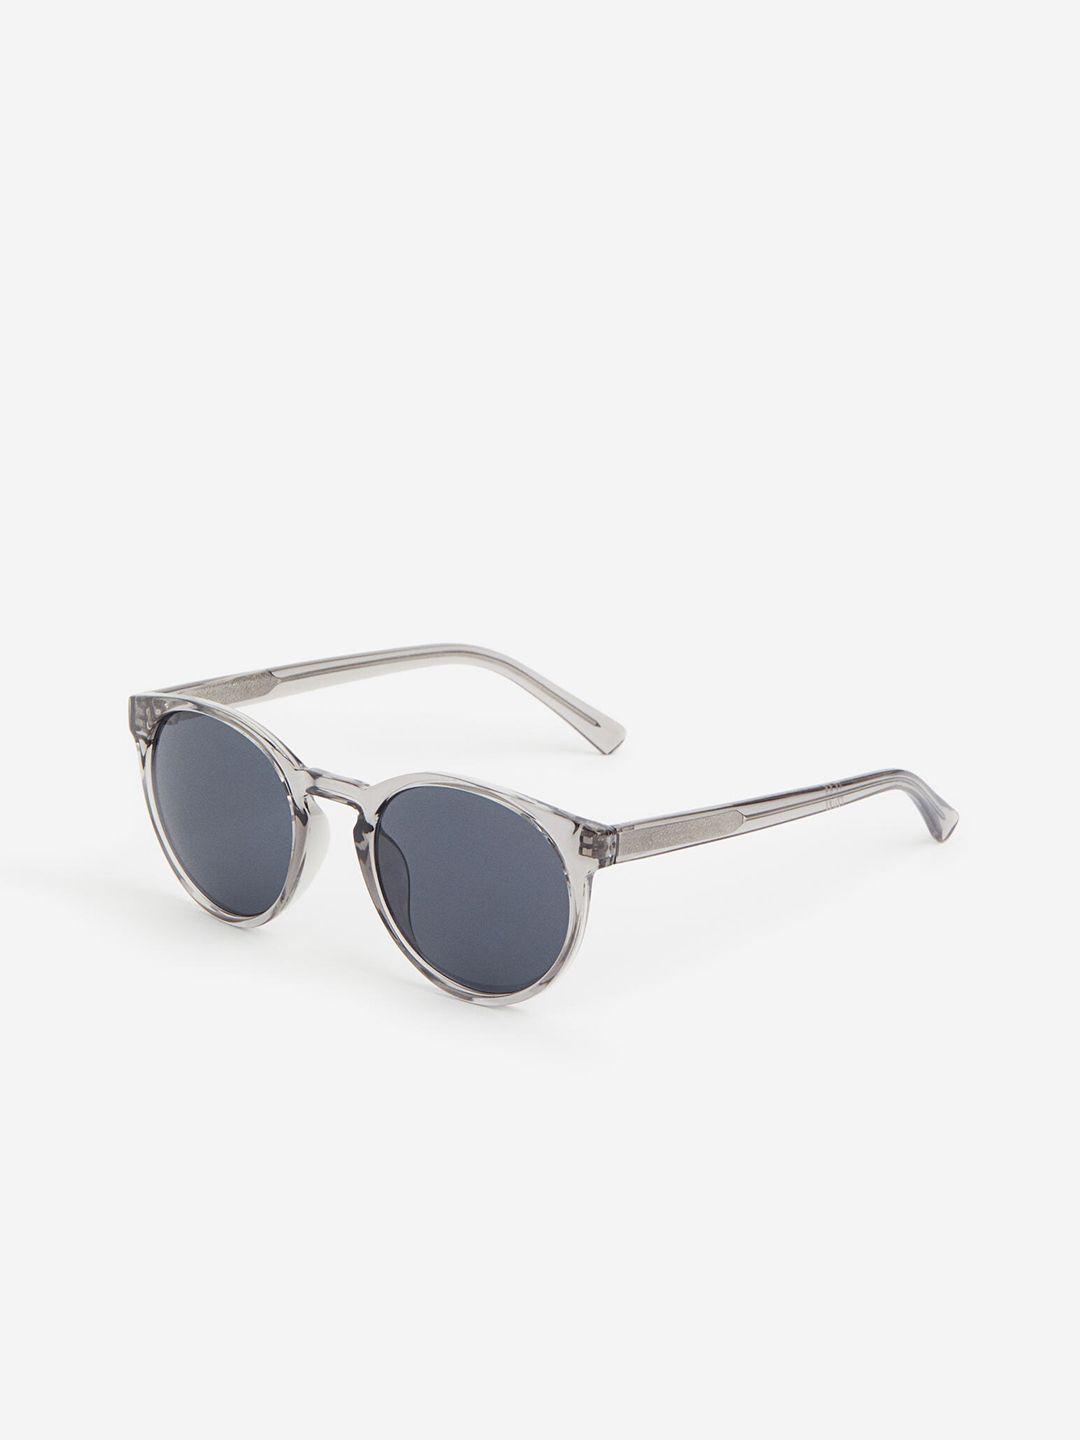 h&m round sunglasses